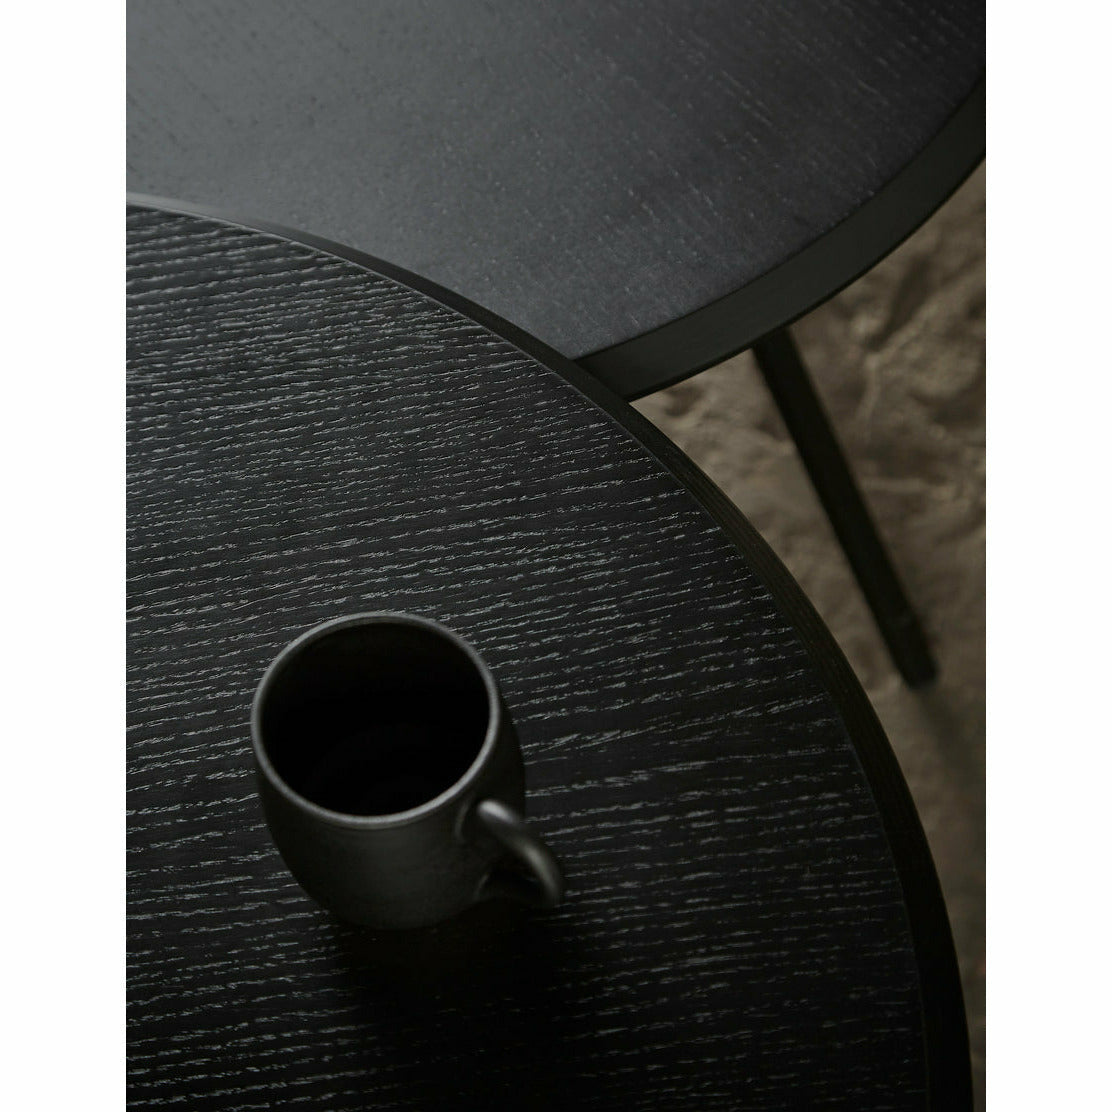 Woud - Mesa de café Soround - cinza preta (Ø60xh44,50)